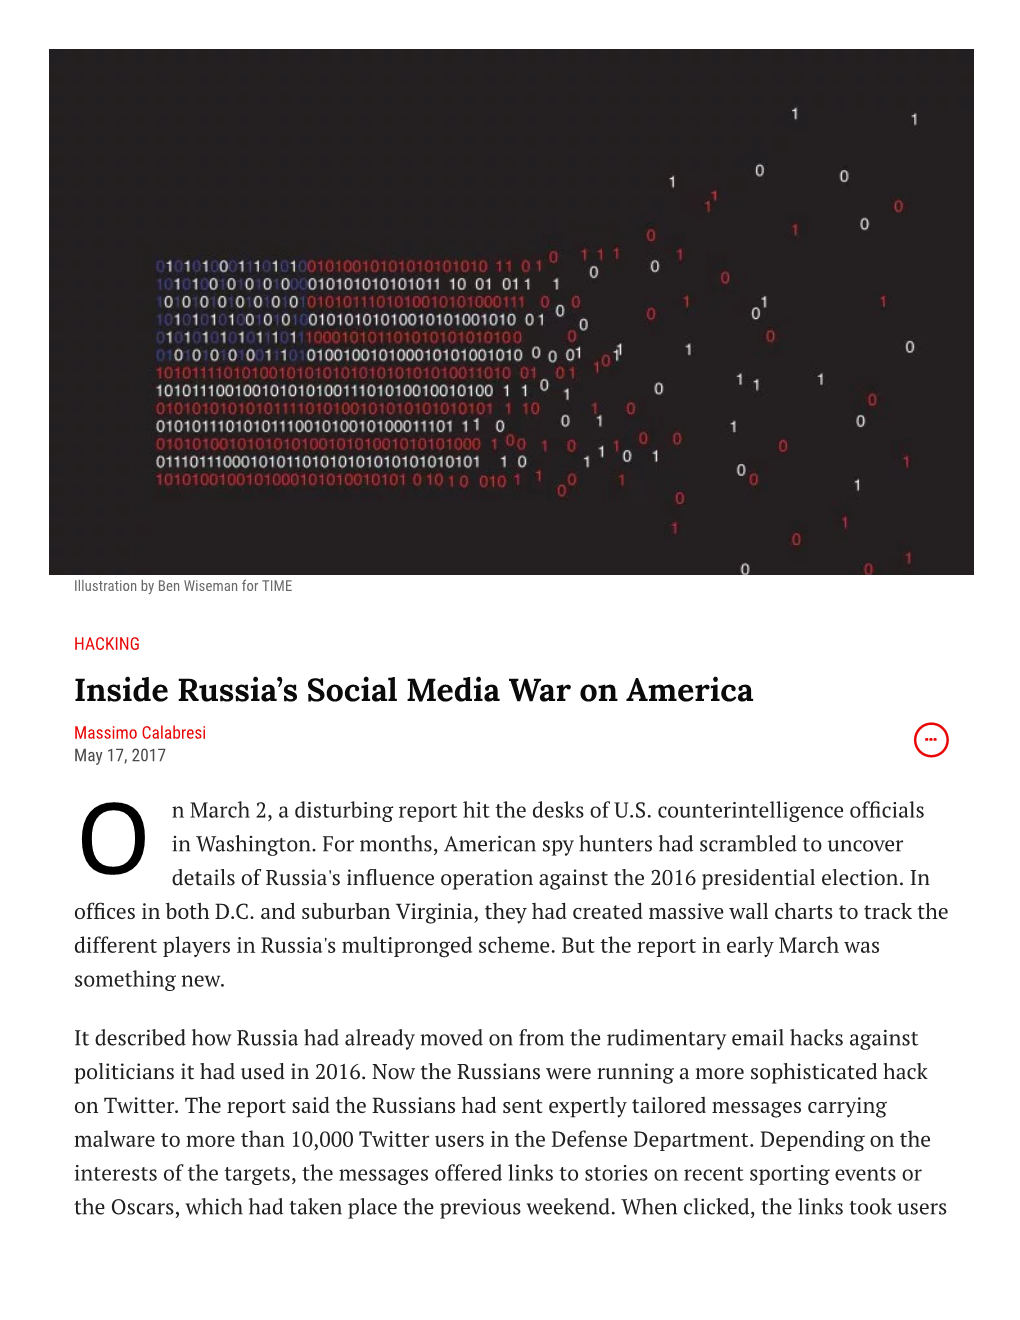 Inside Russia's Social Media War on America